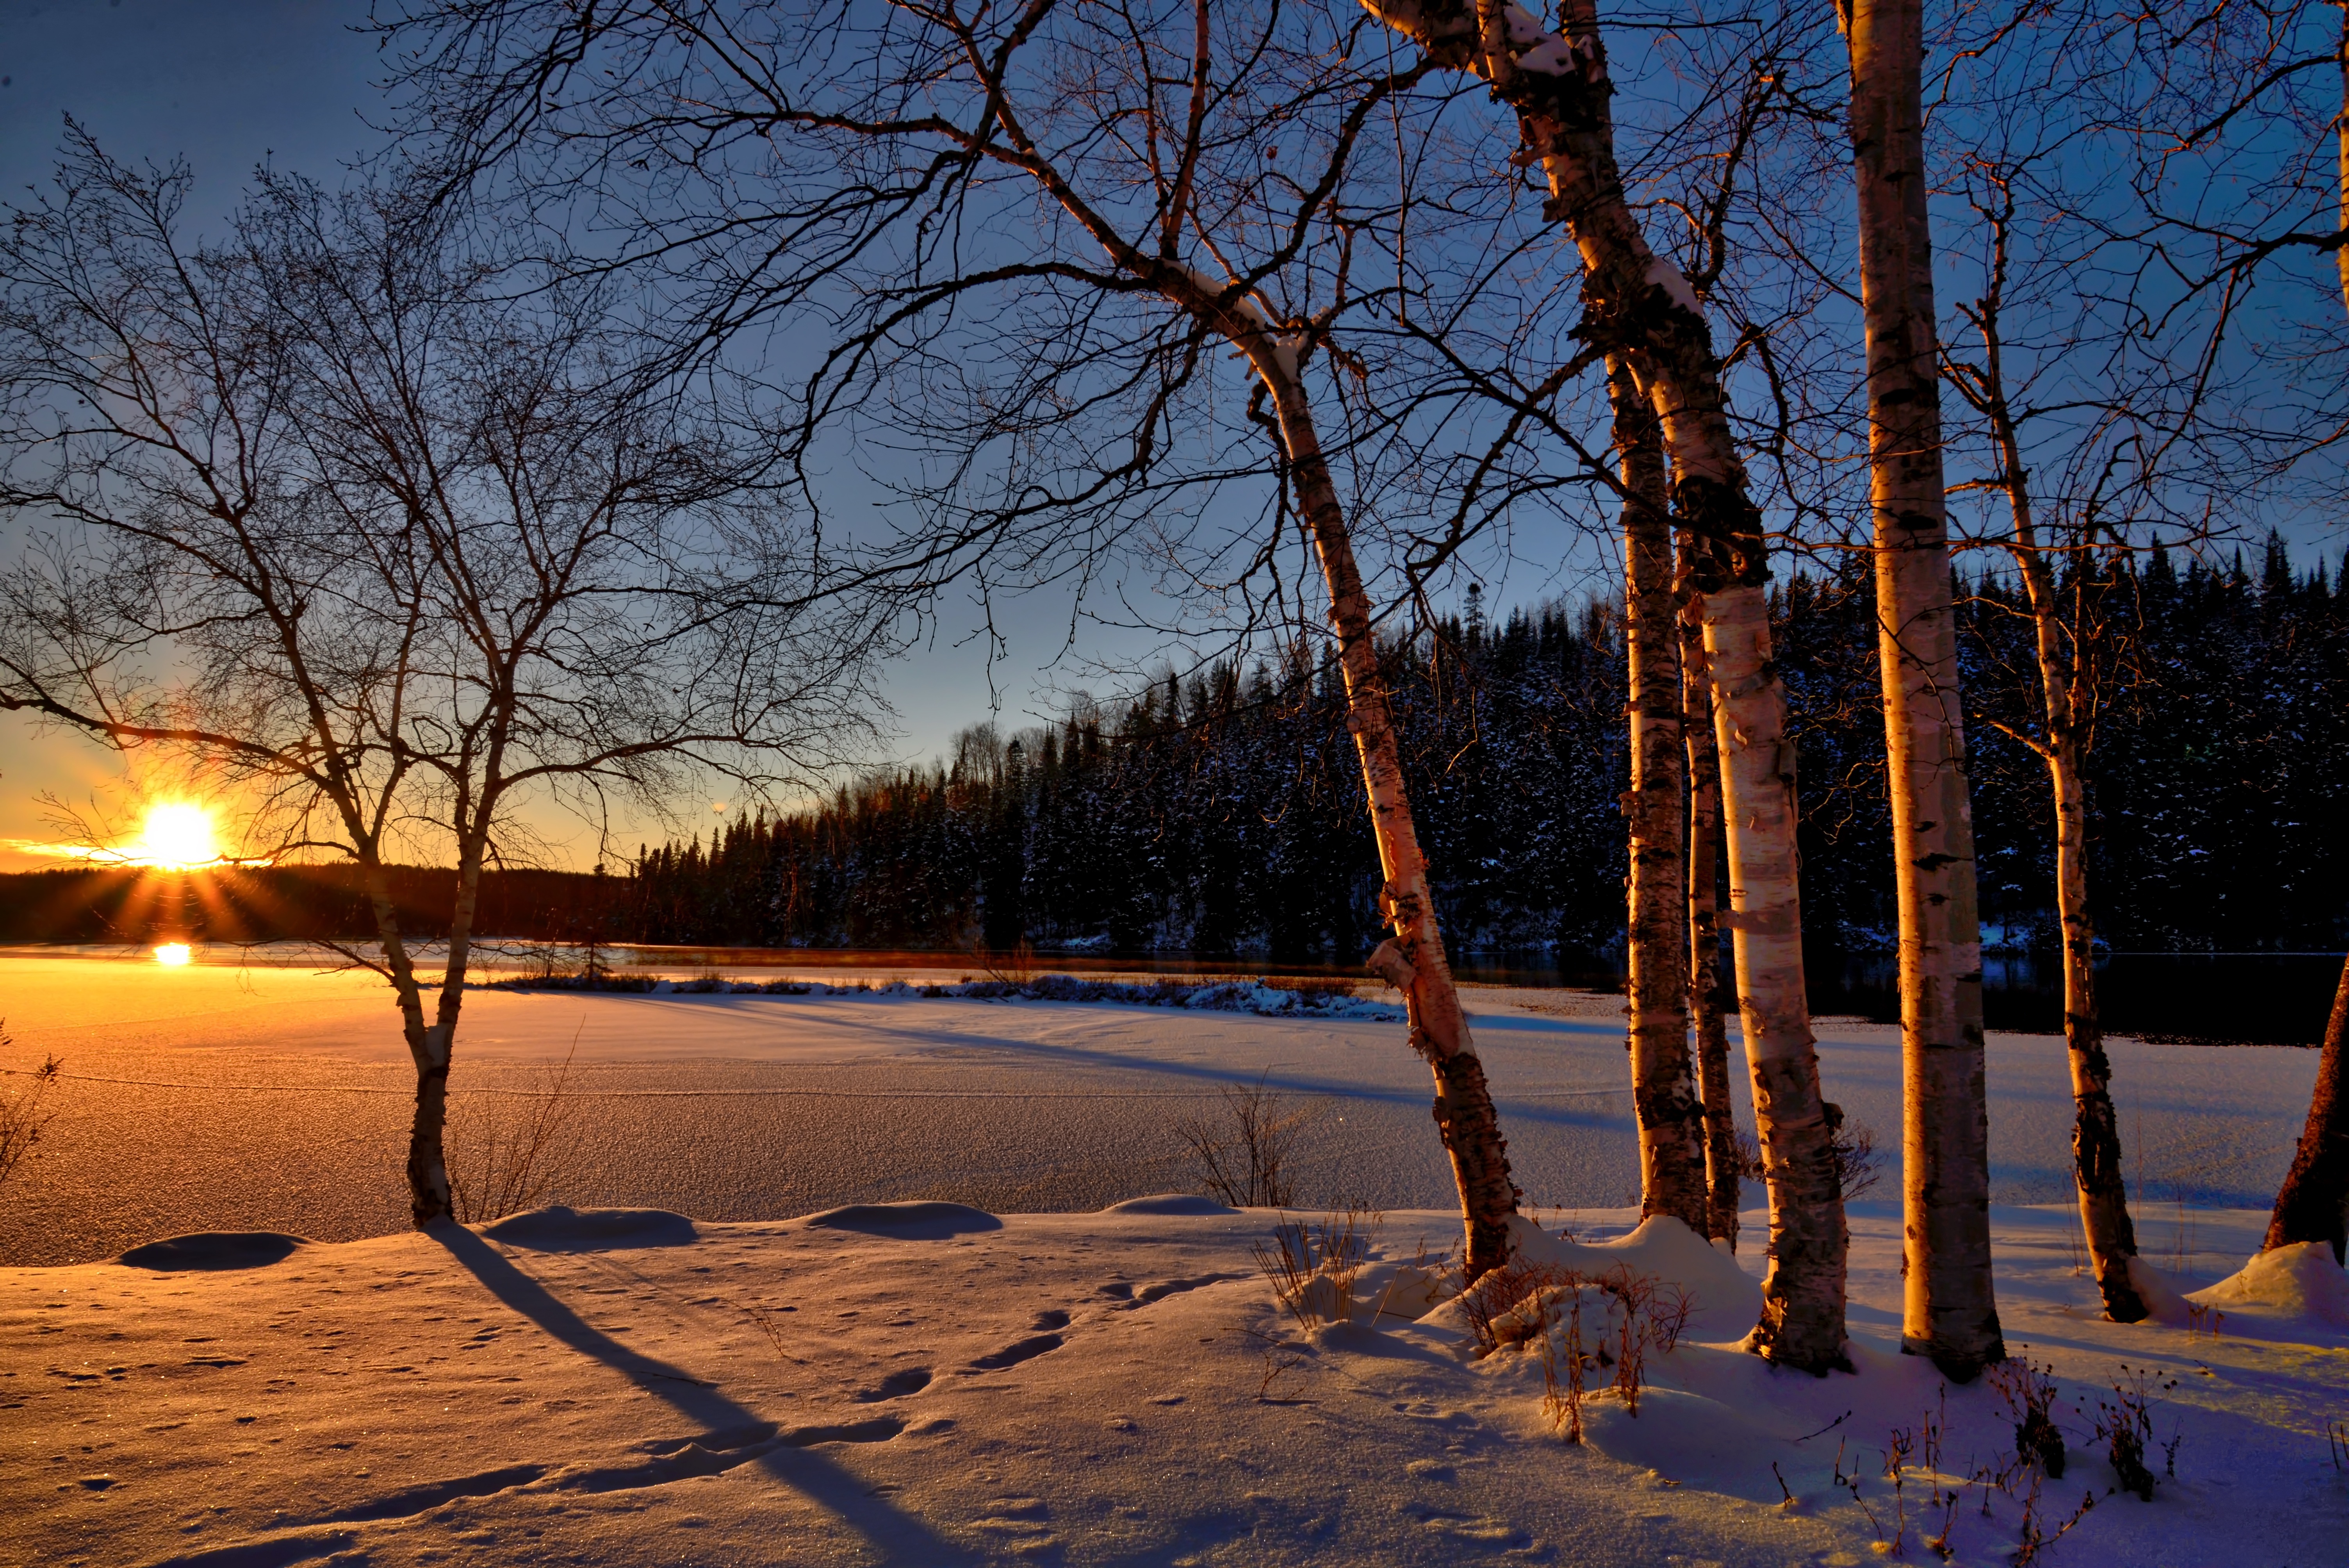 Evening winter landscape